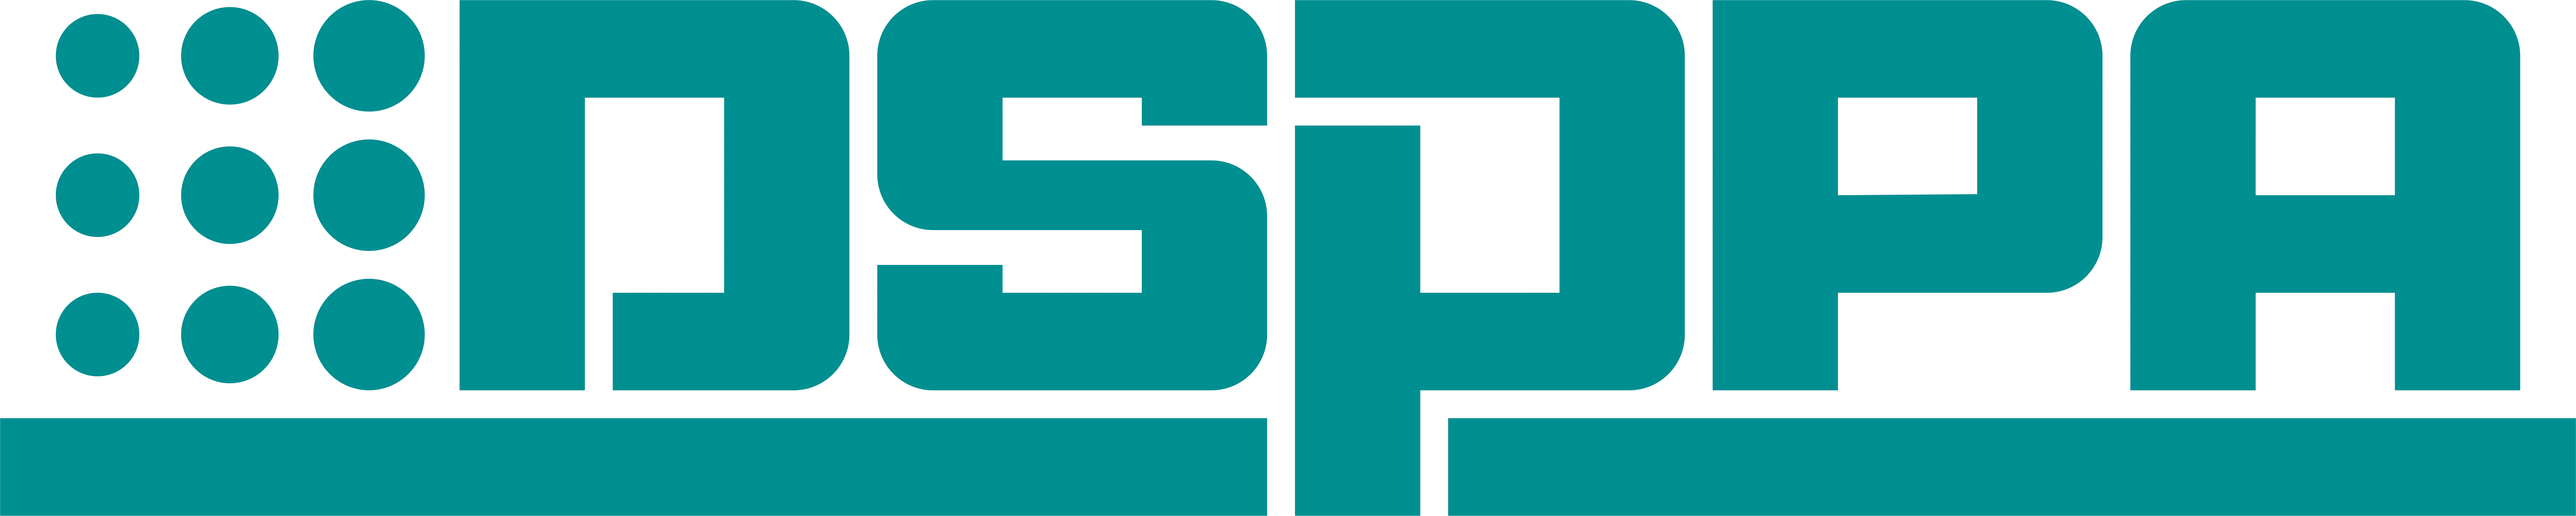 DSPPA logo